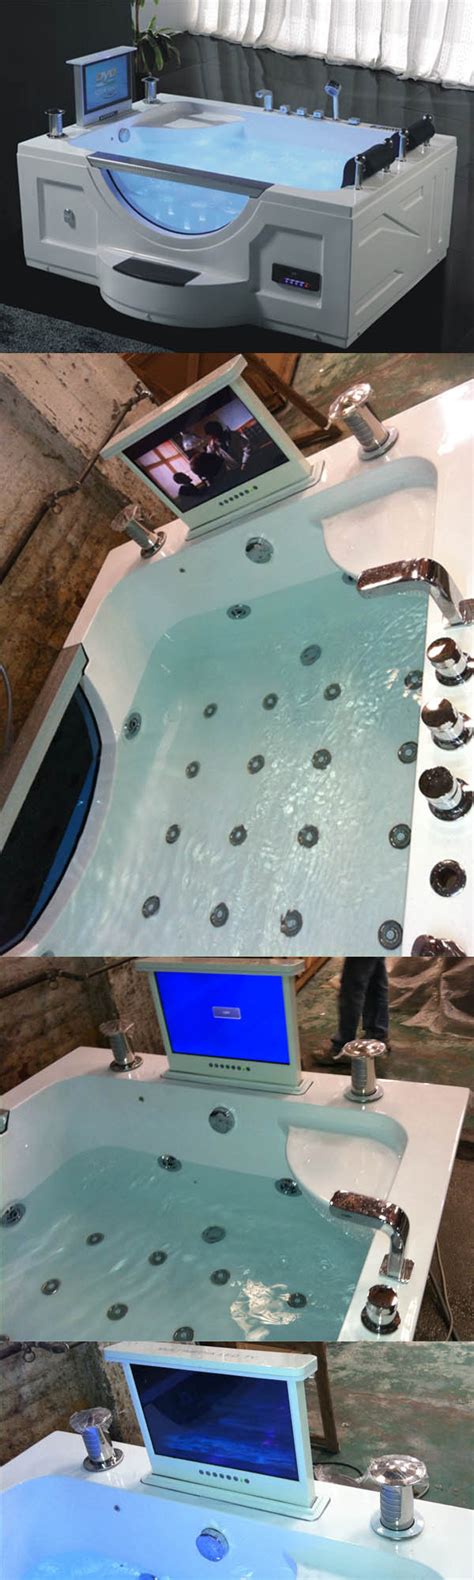 Hs B277a Luxurious Whirlpool Japanese Massage Bathtub